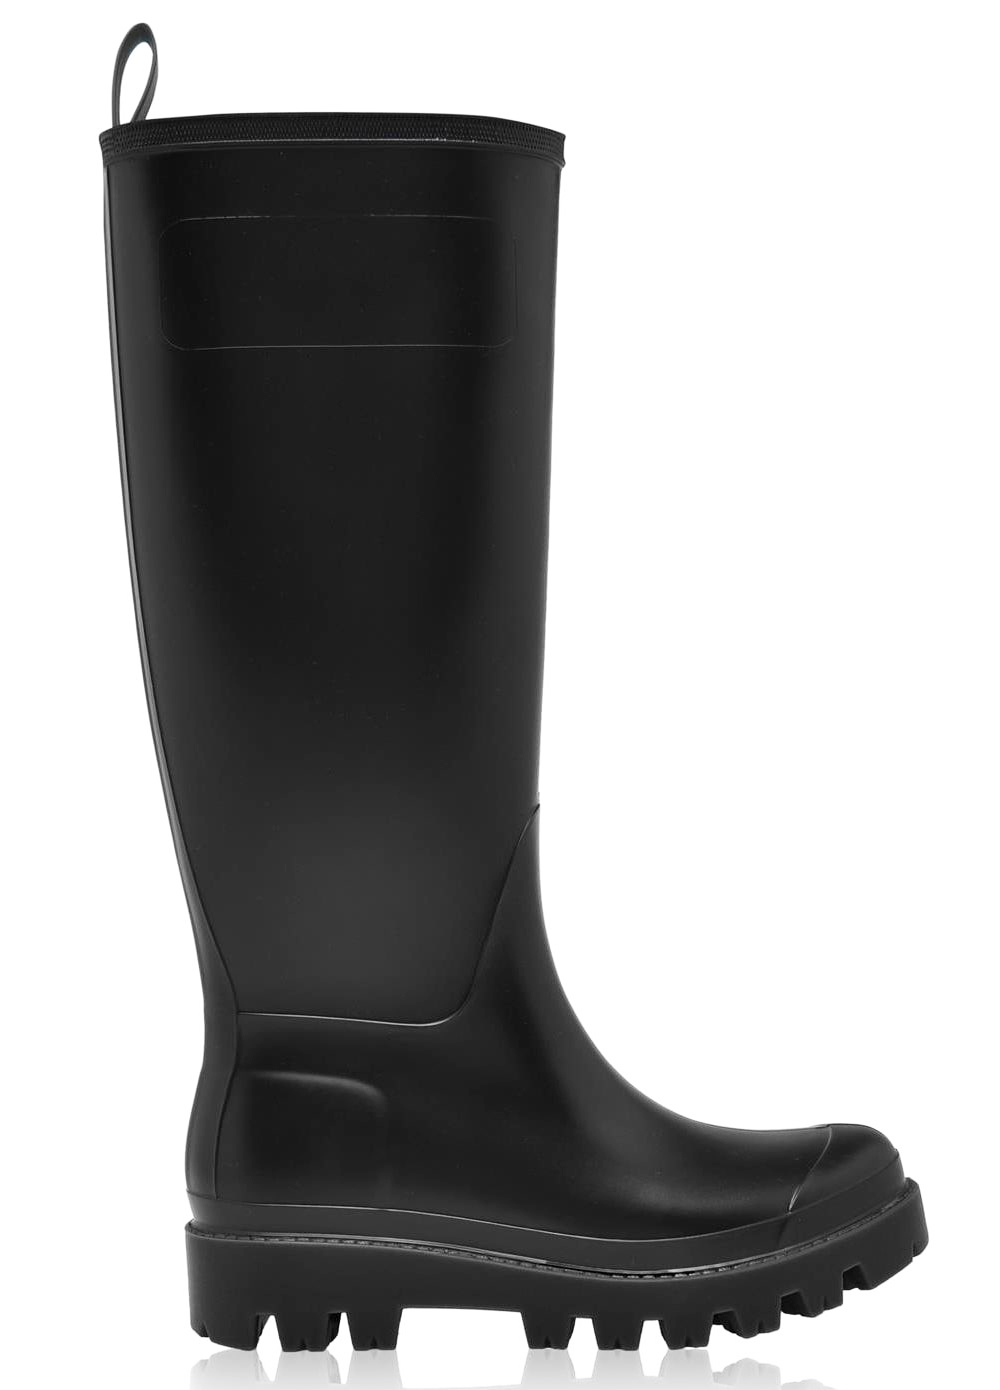 Giove Bis Tall Wellington Rain Boots